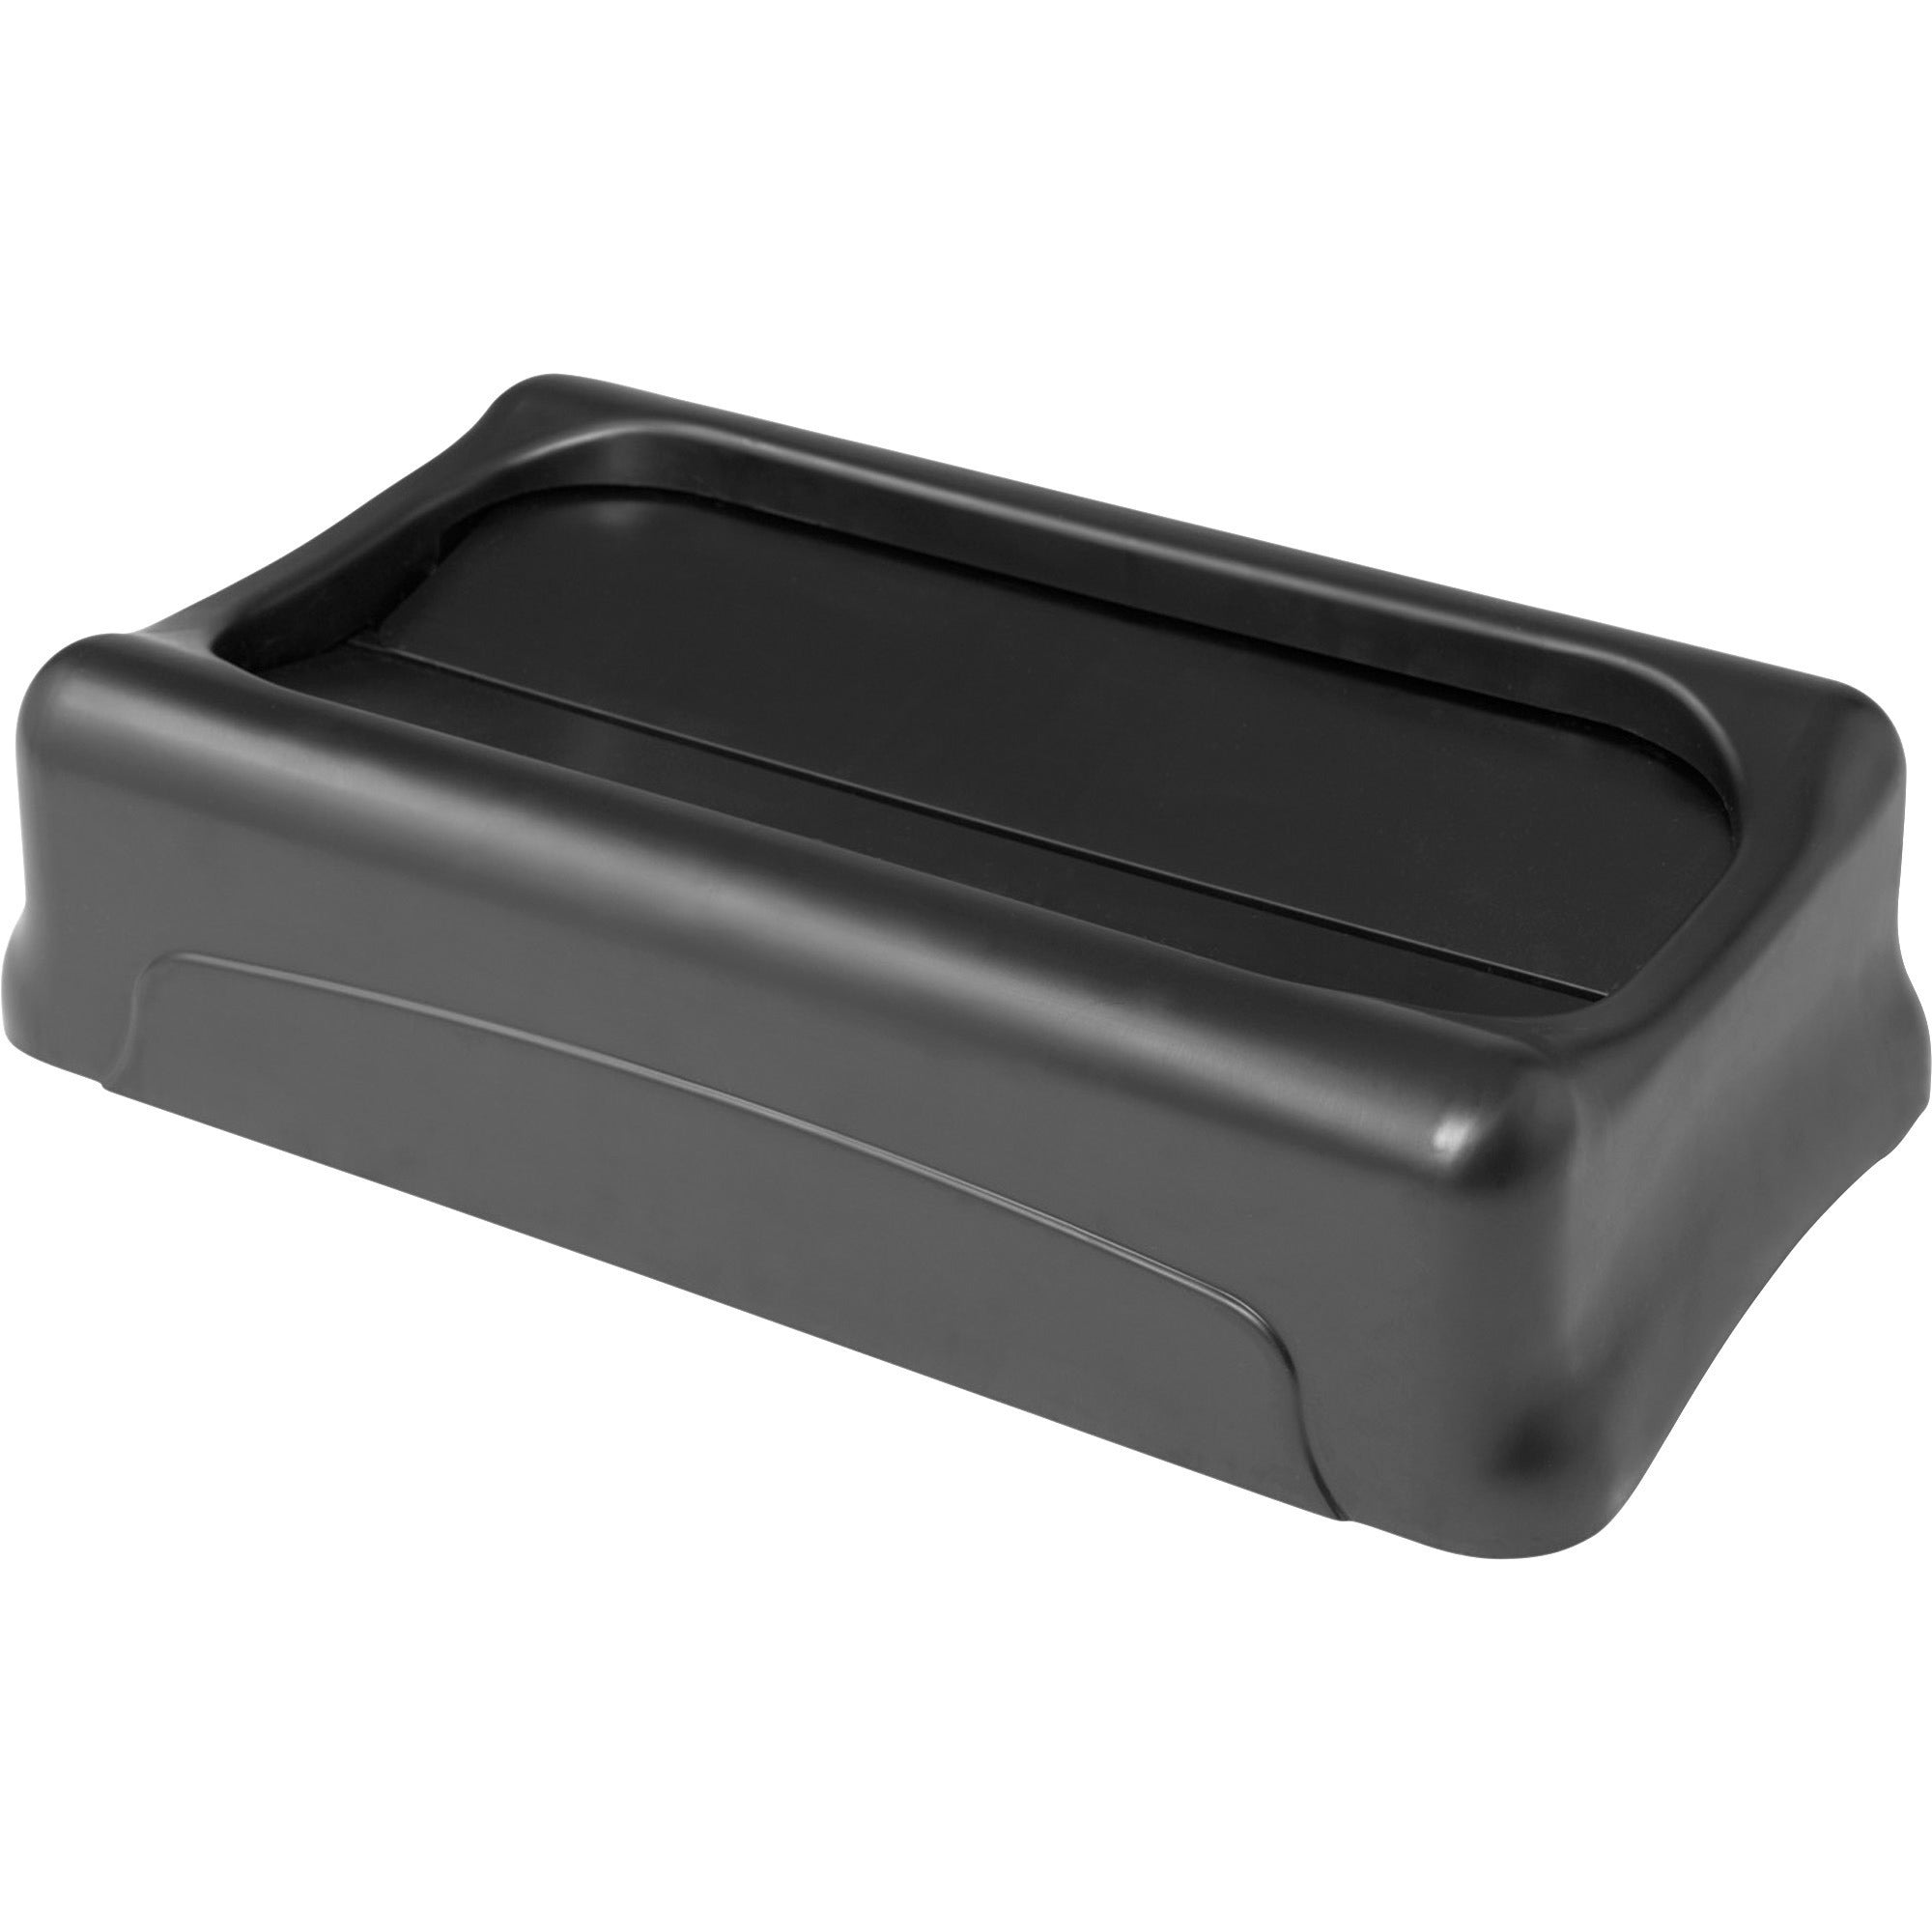 rubbermaid-commercial-slim-jim-container-swing-lid-rectangular-plastic-4-carton-black_rcp267360bkct - 1